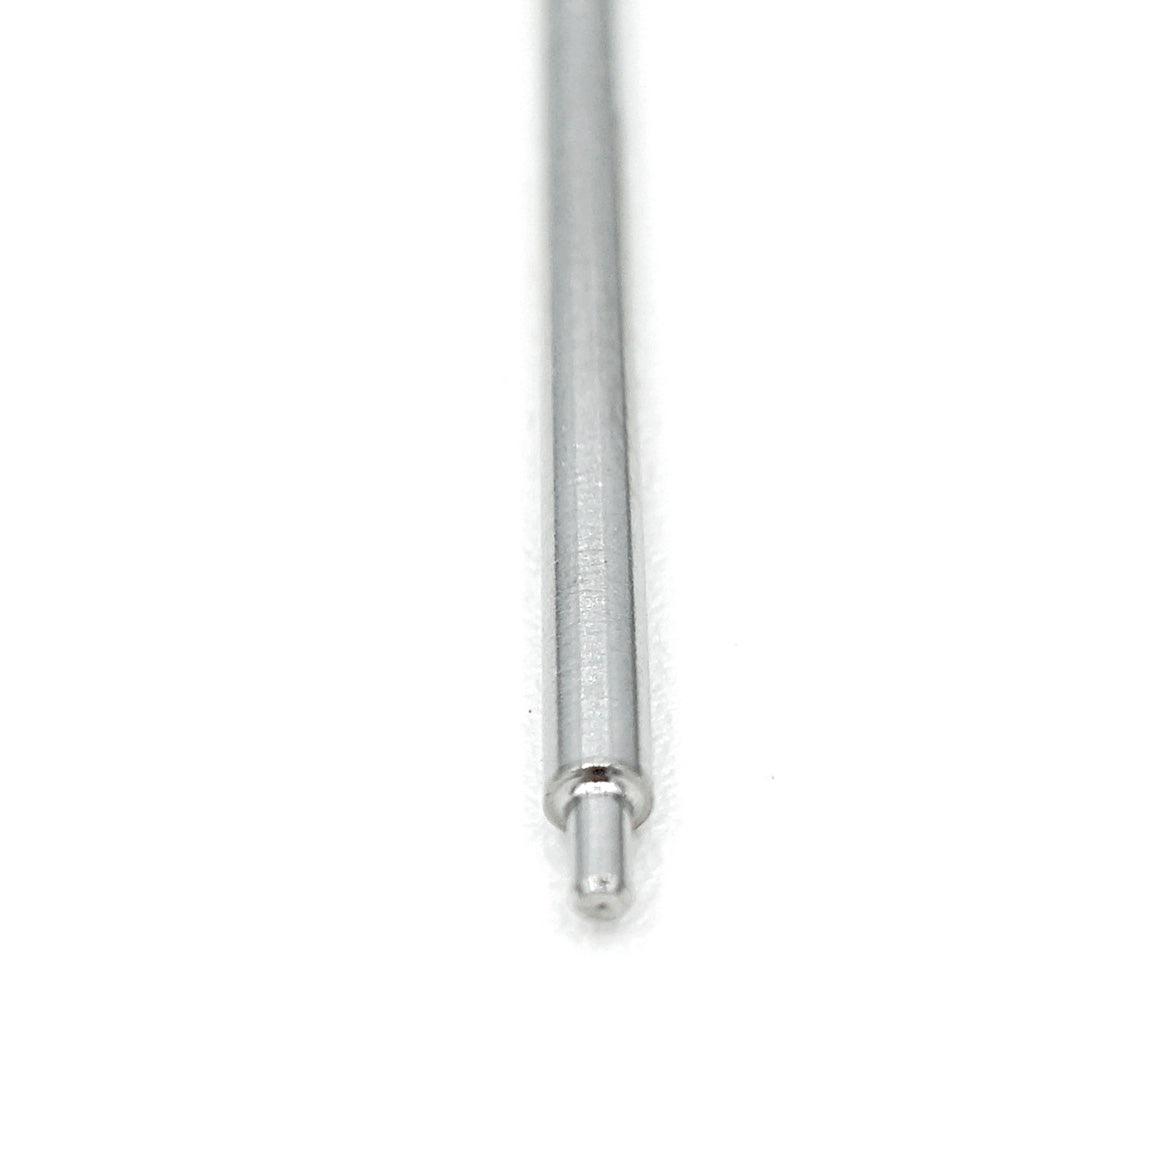 Stiletto Piercing Needles - 16G